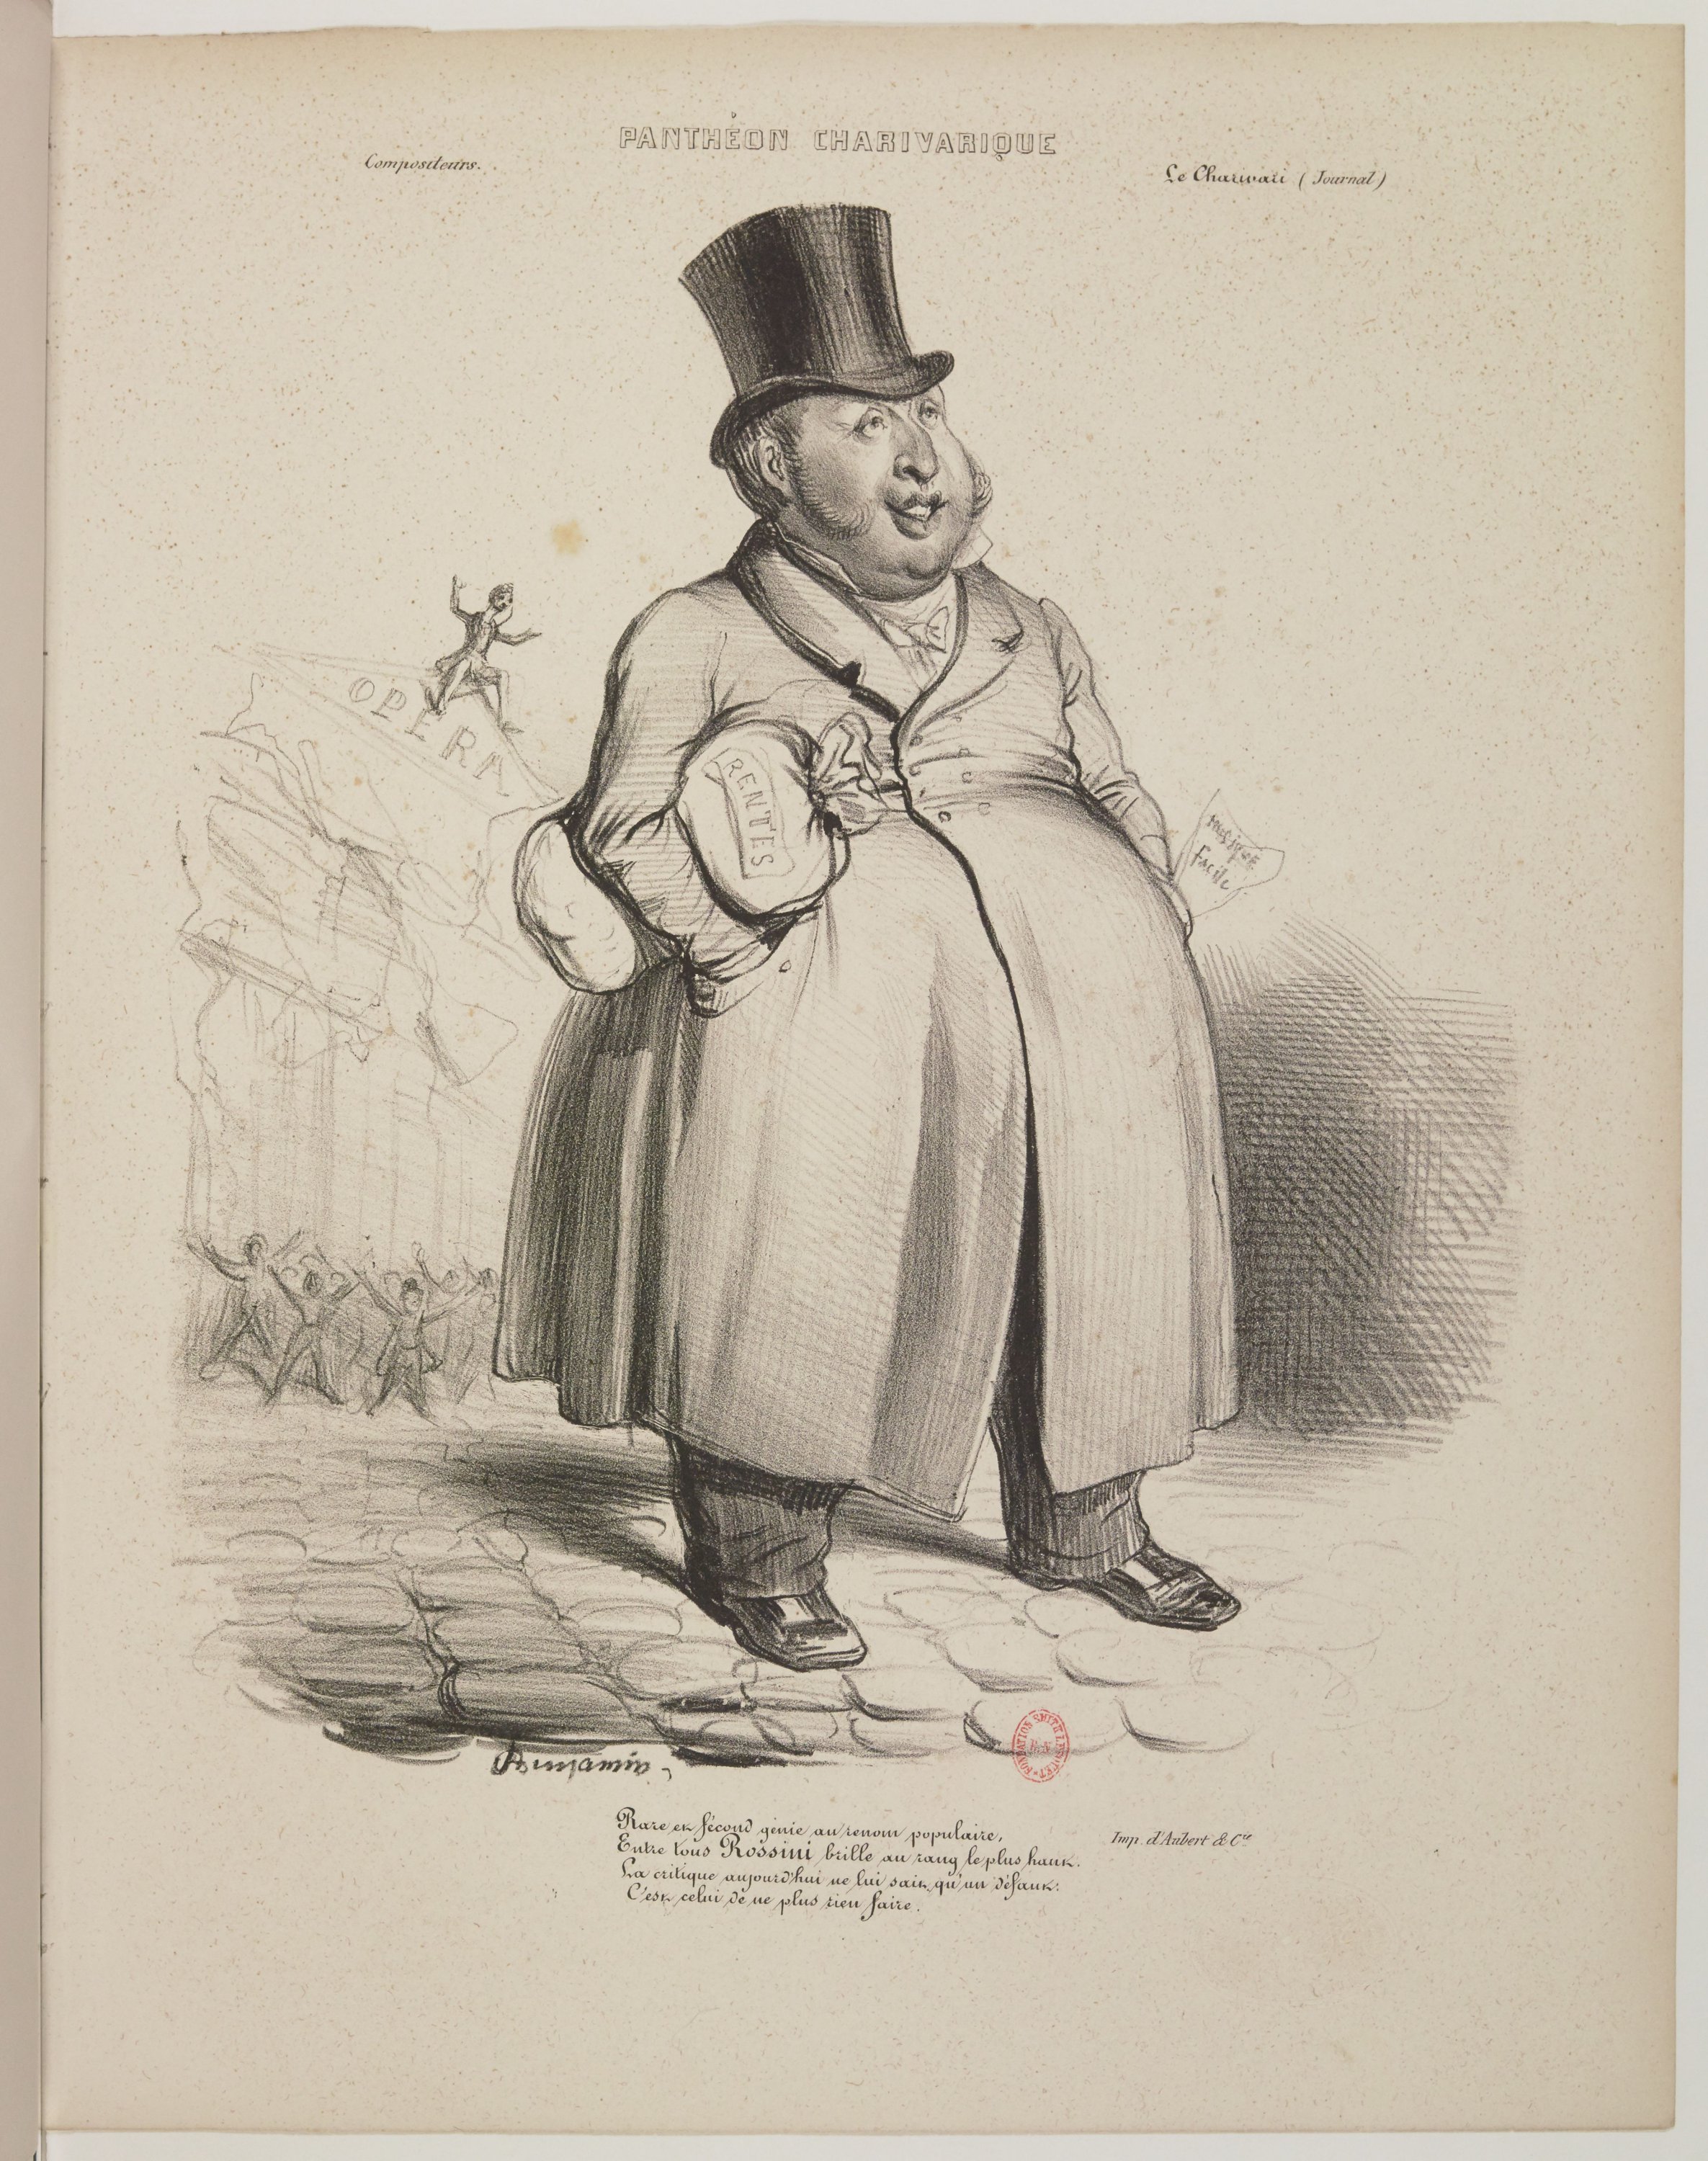 Gioachino Rossini par Benjamin Roubaud - Panthéon charivarique